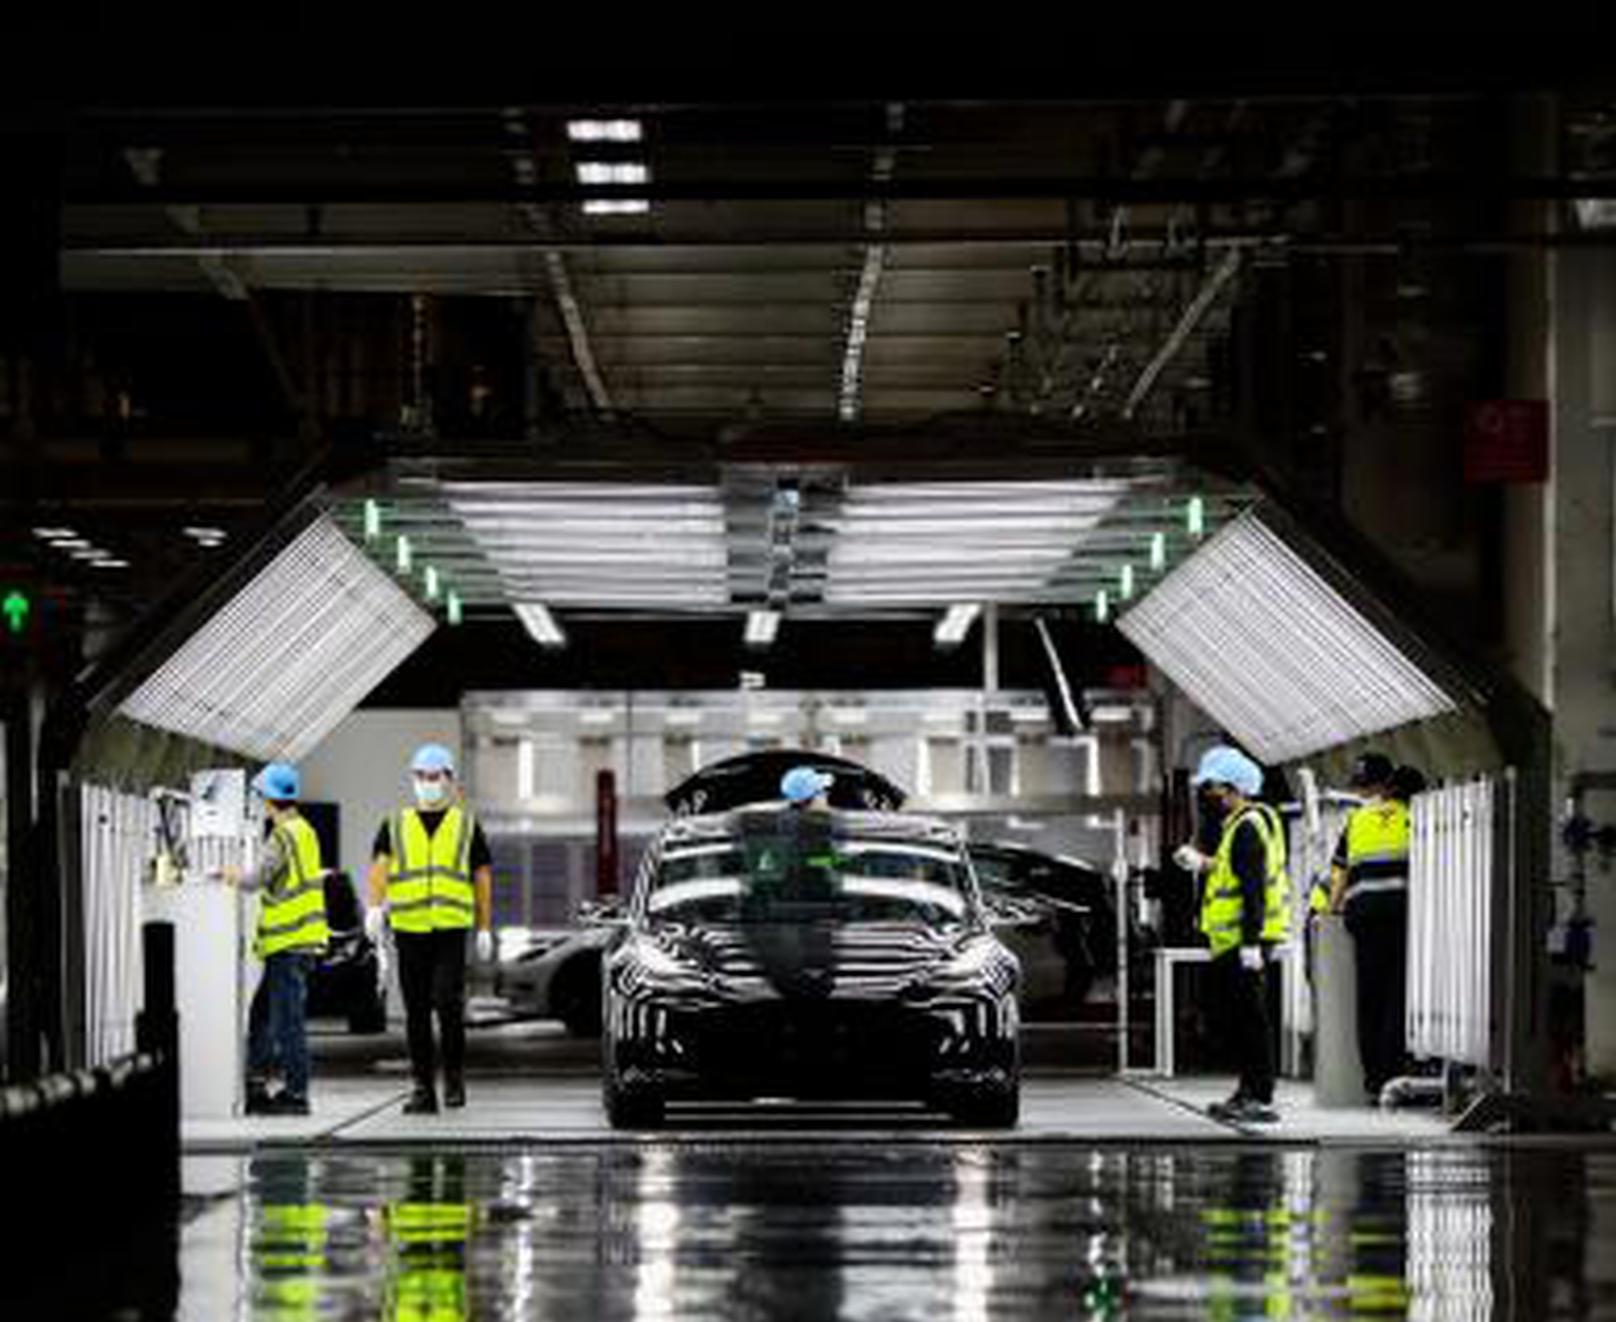 Assembly line expanding, no second plant: Tesla insider